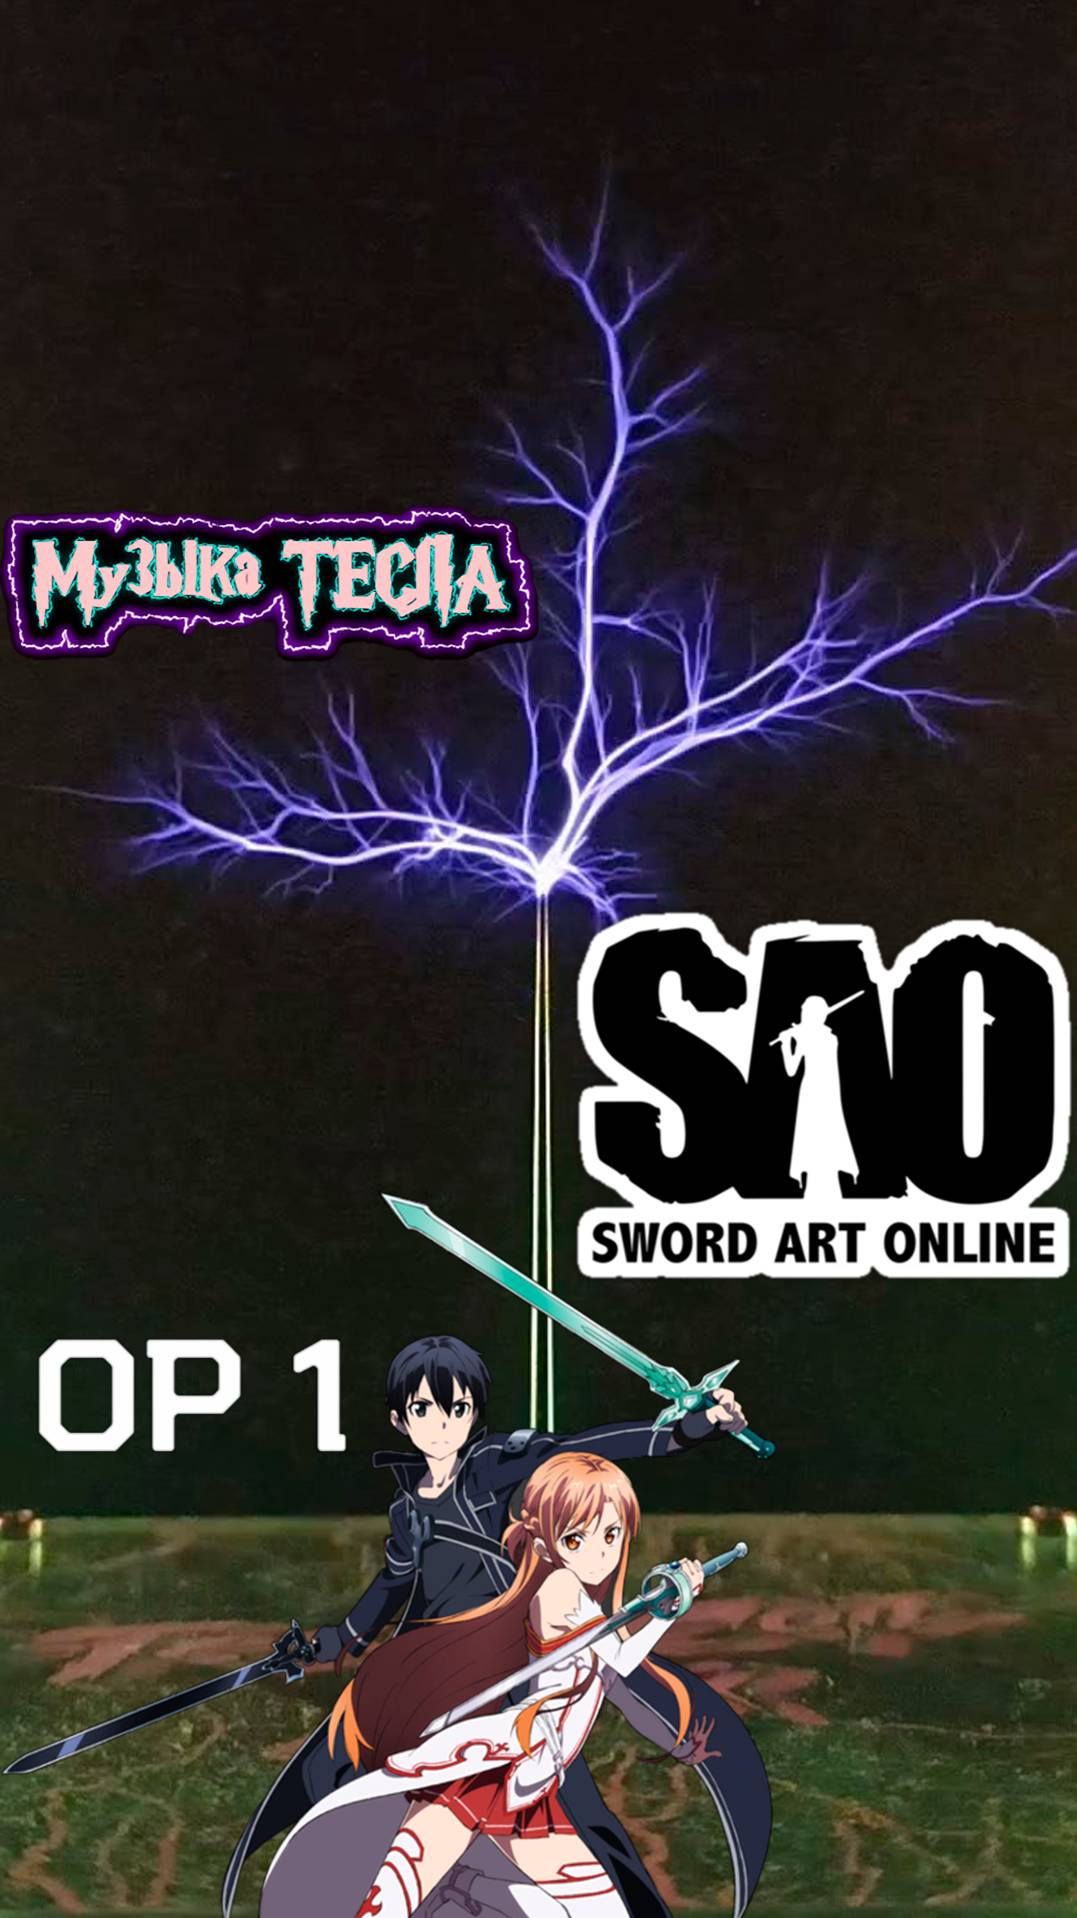 Sword Art Online   Opening 1 Creditless Tesla Coil Mix #музыкатесла